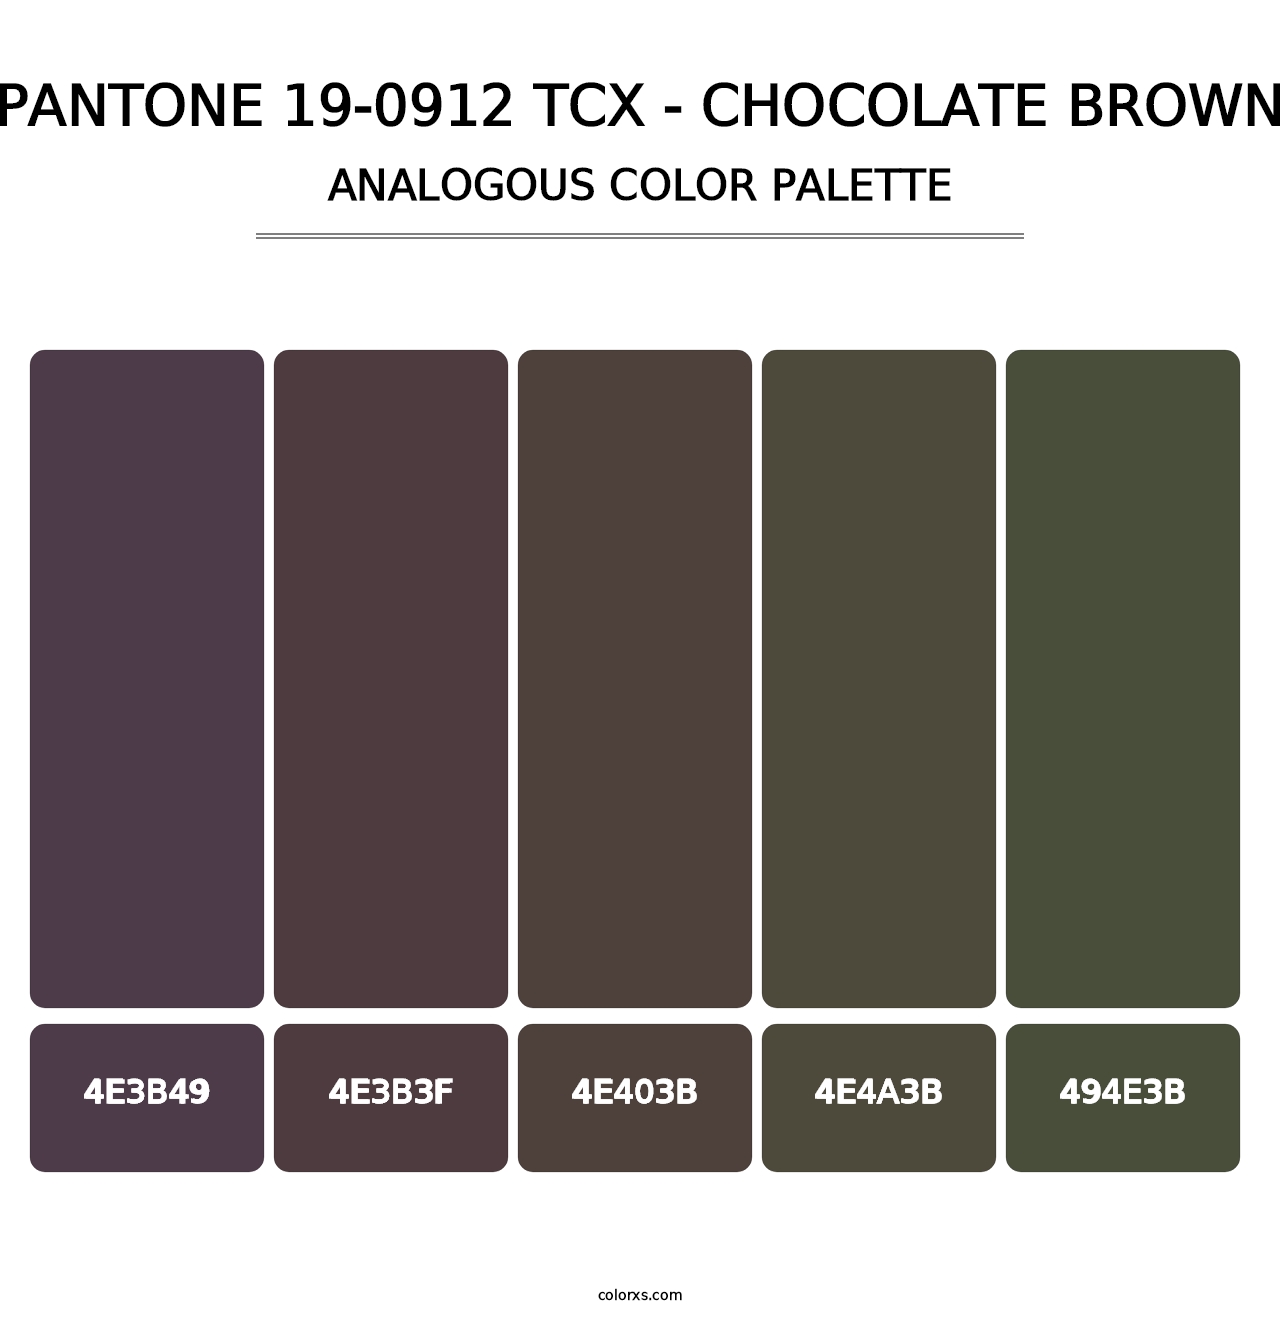 PANTONE 19-0912 TCX - Chocolate Brown - Analogous Color Palette